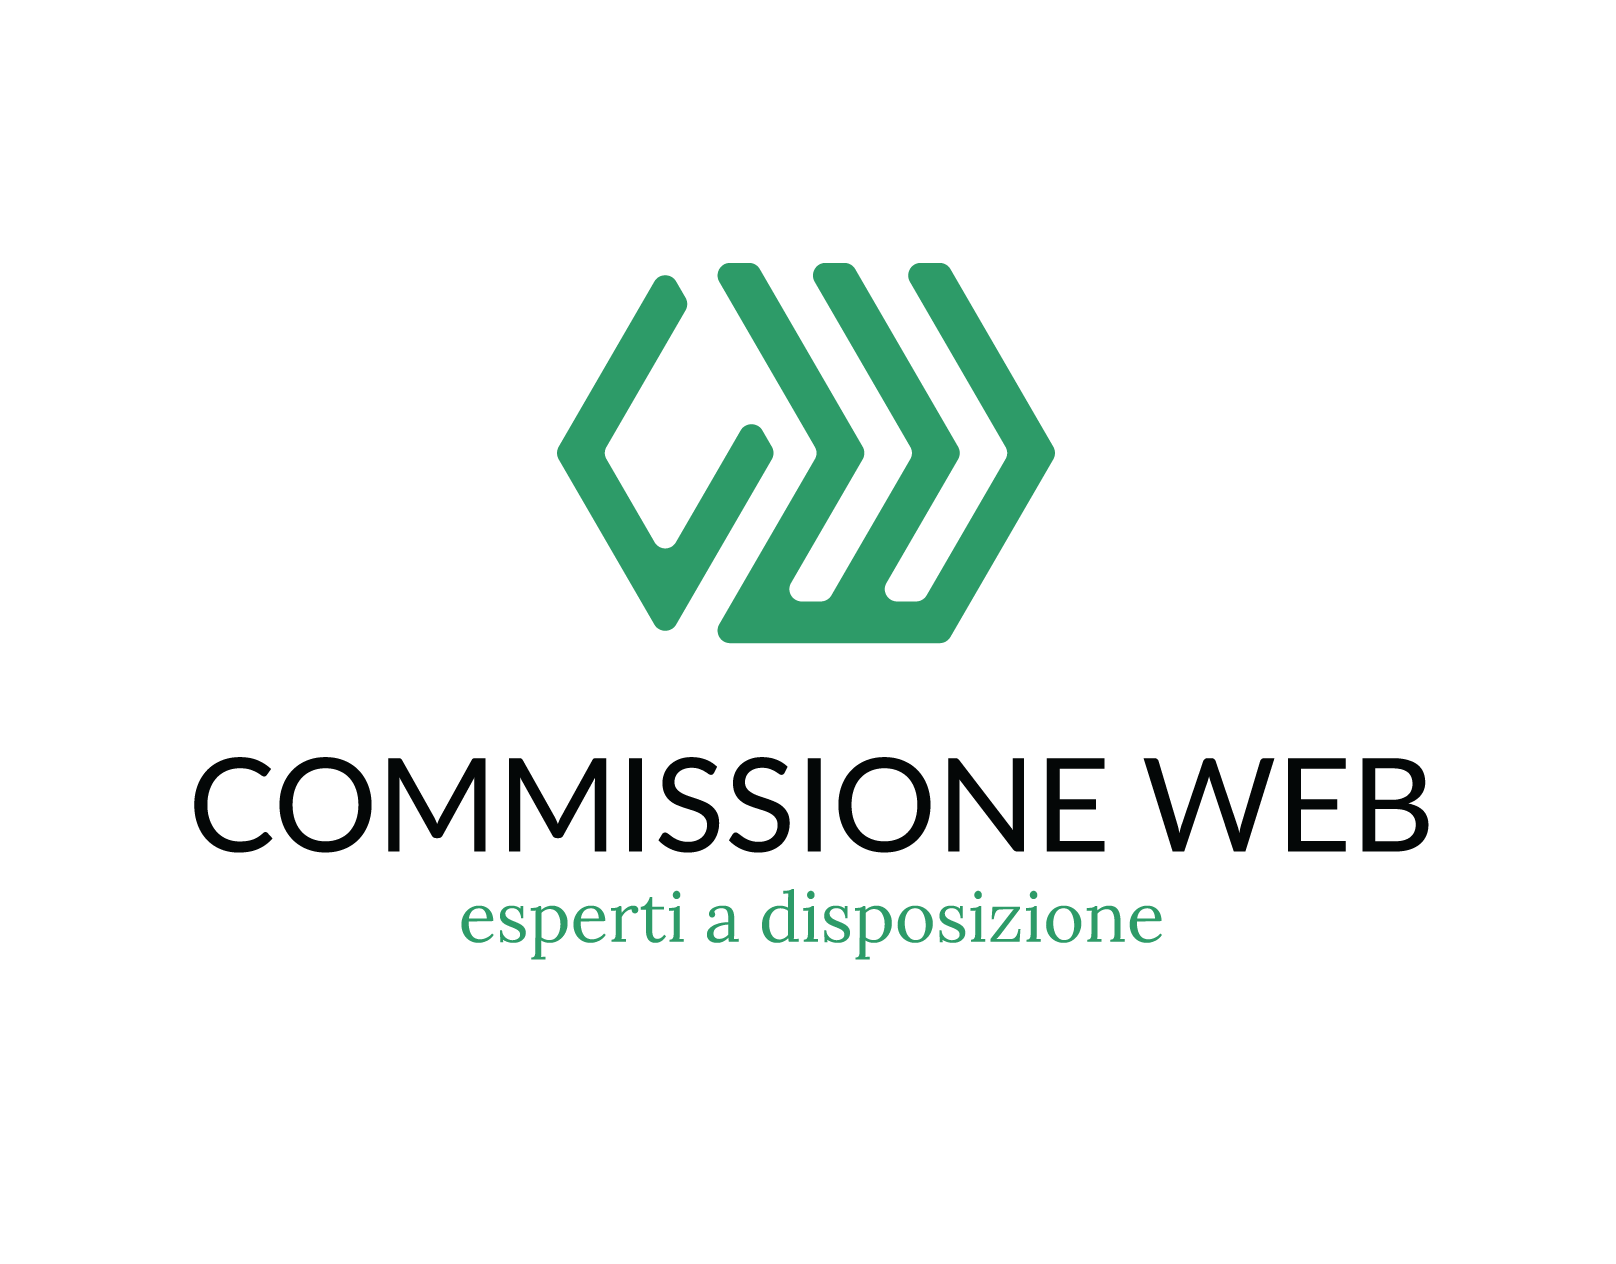 COMMISSIONE WEB